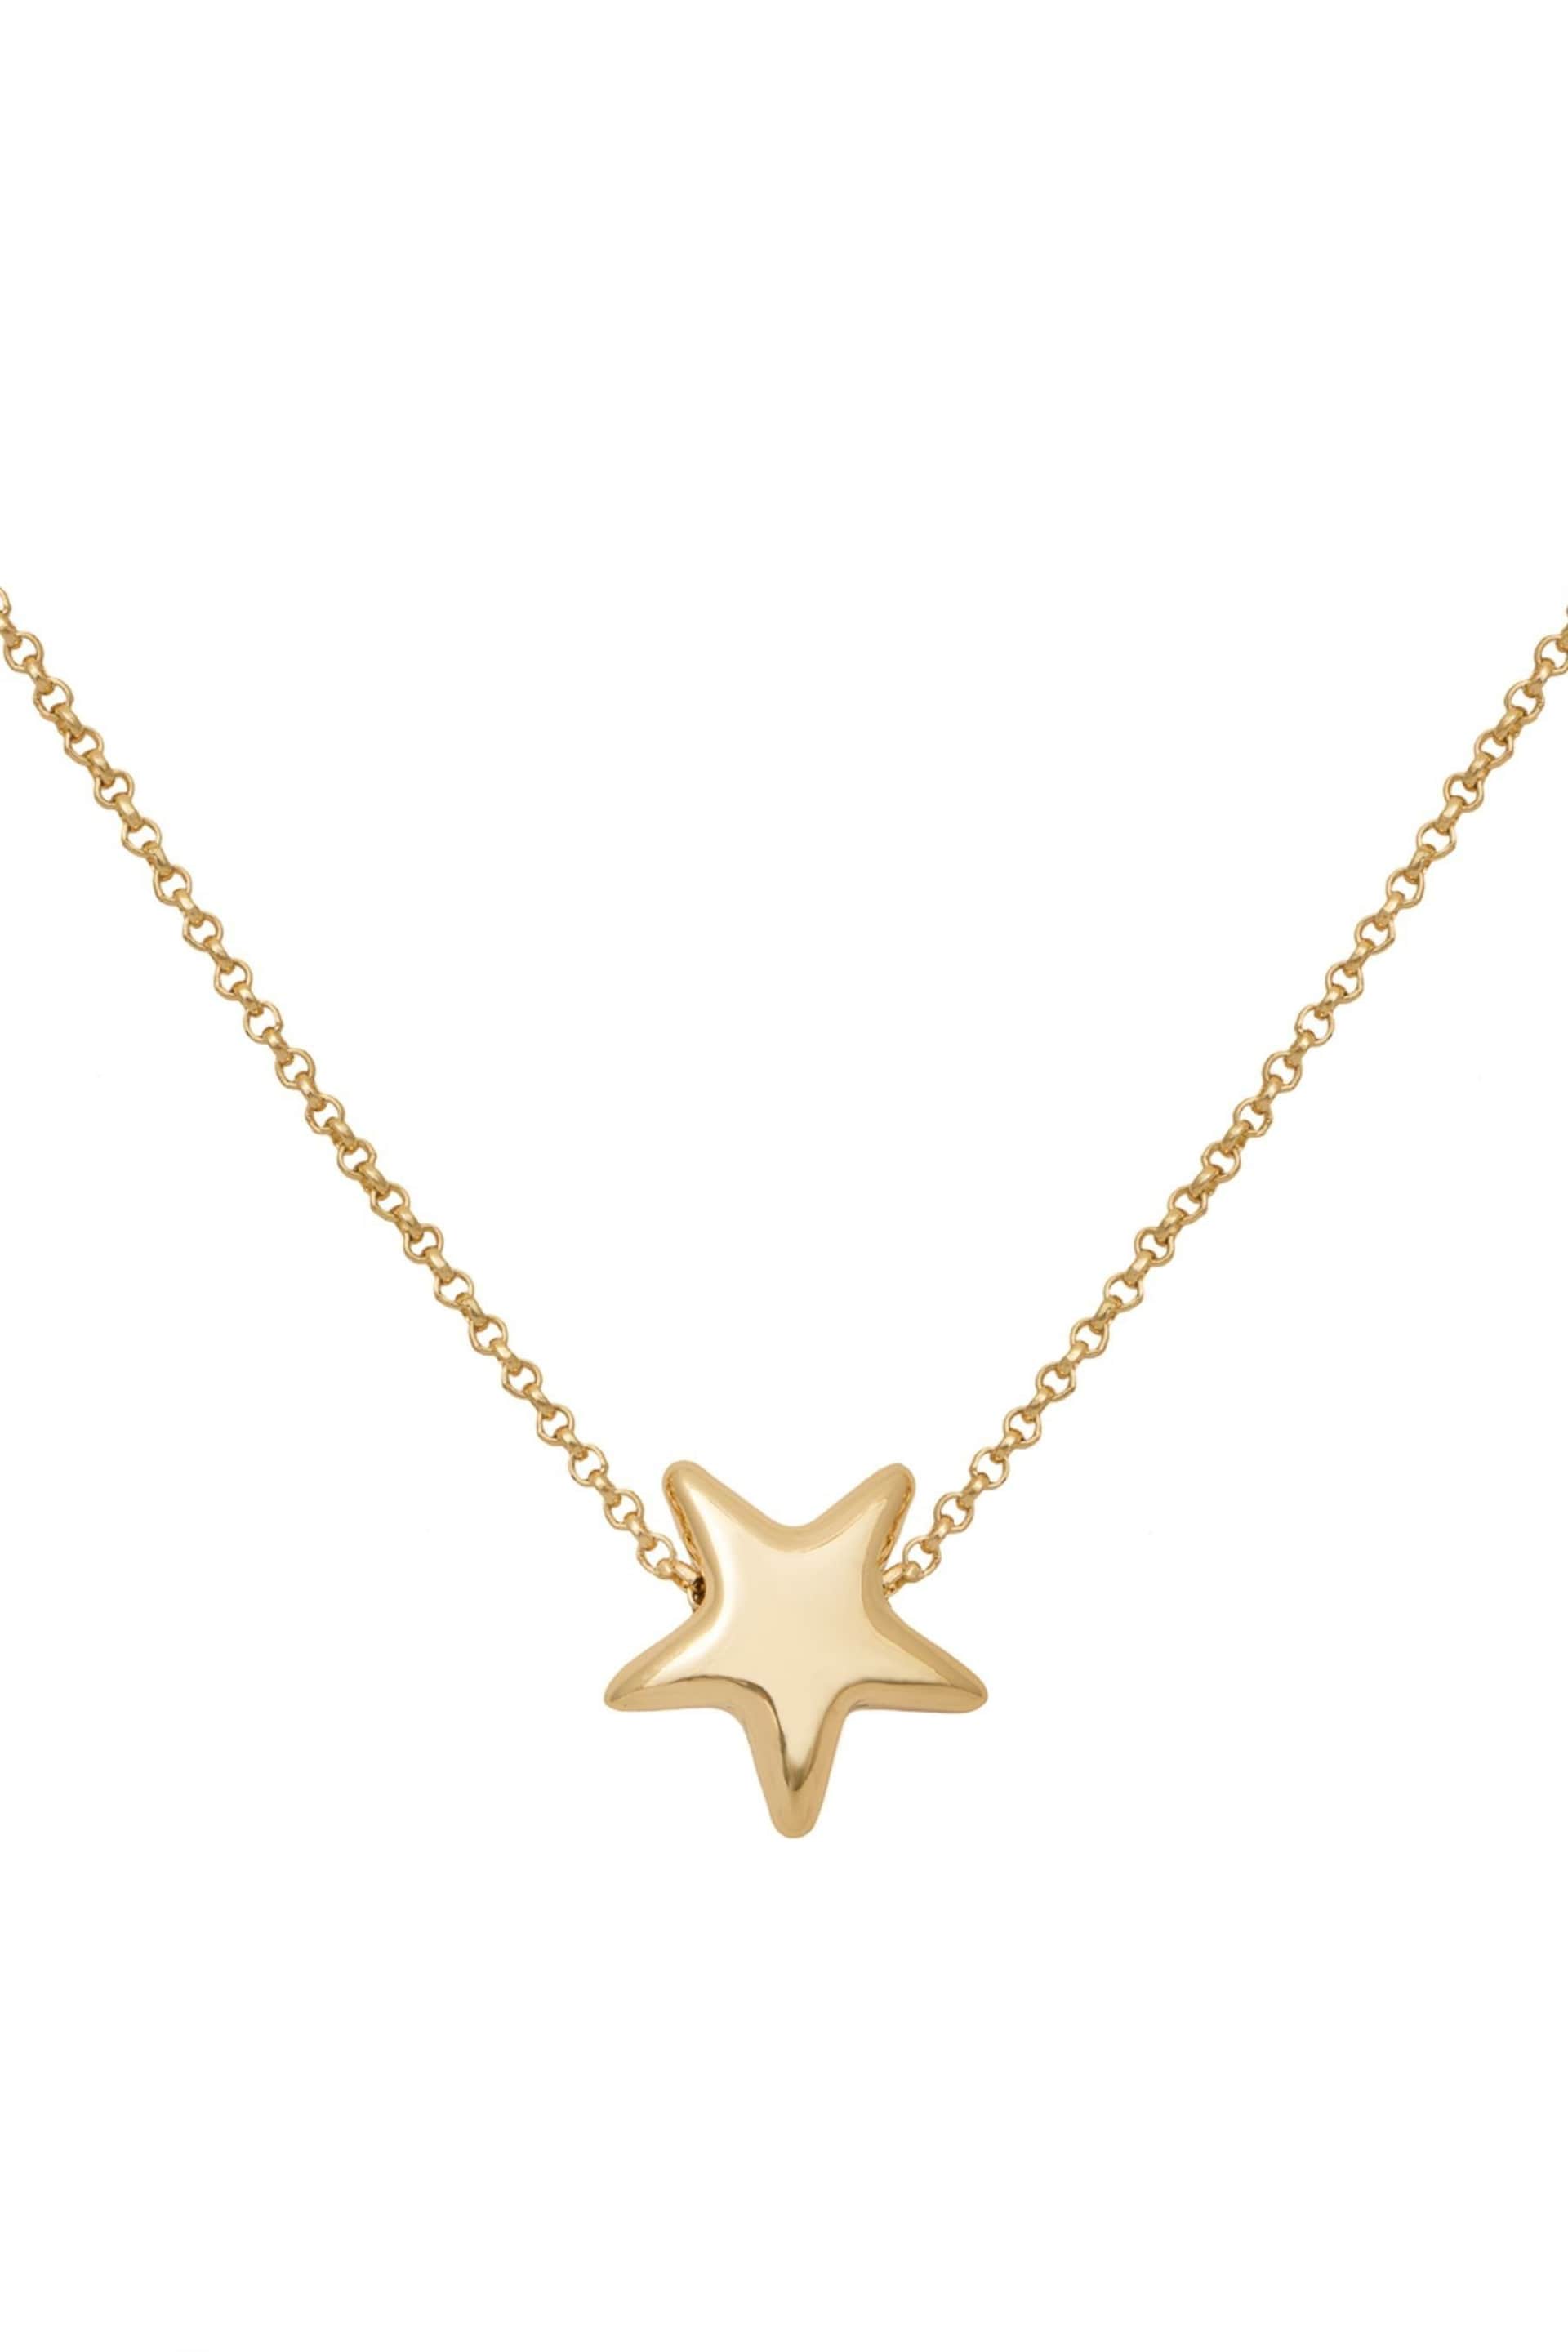 Caramel Jewellery London Gold Tone Star Choker Necklace - Image 5 of 5